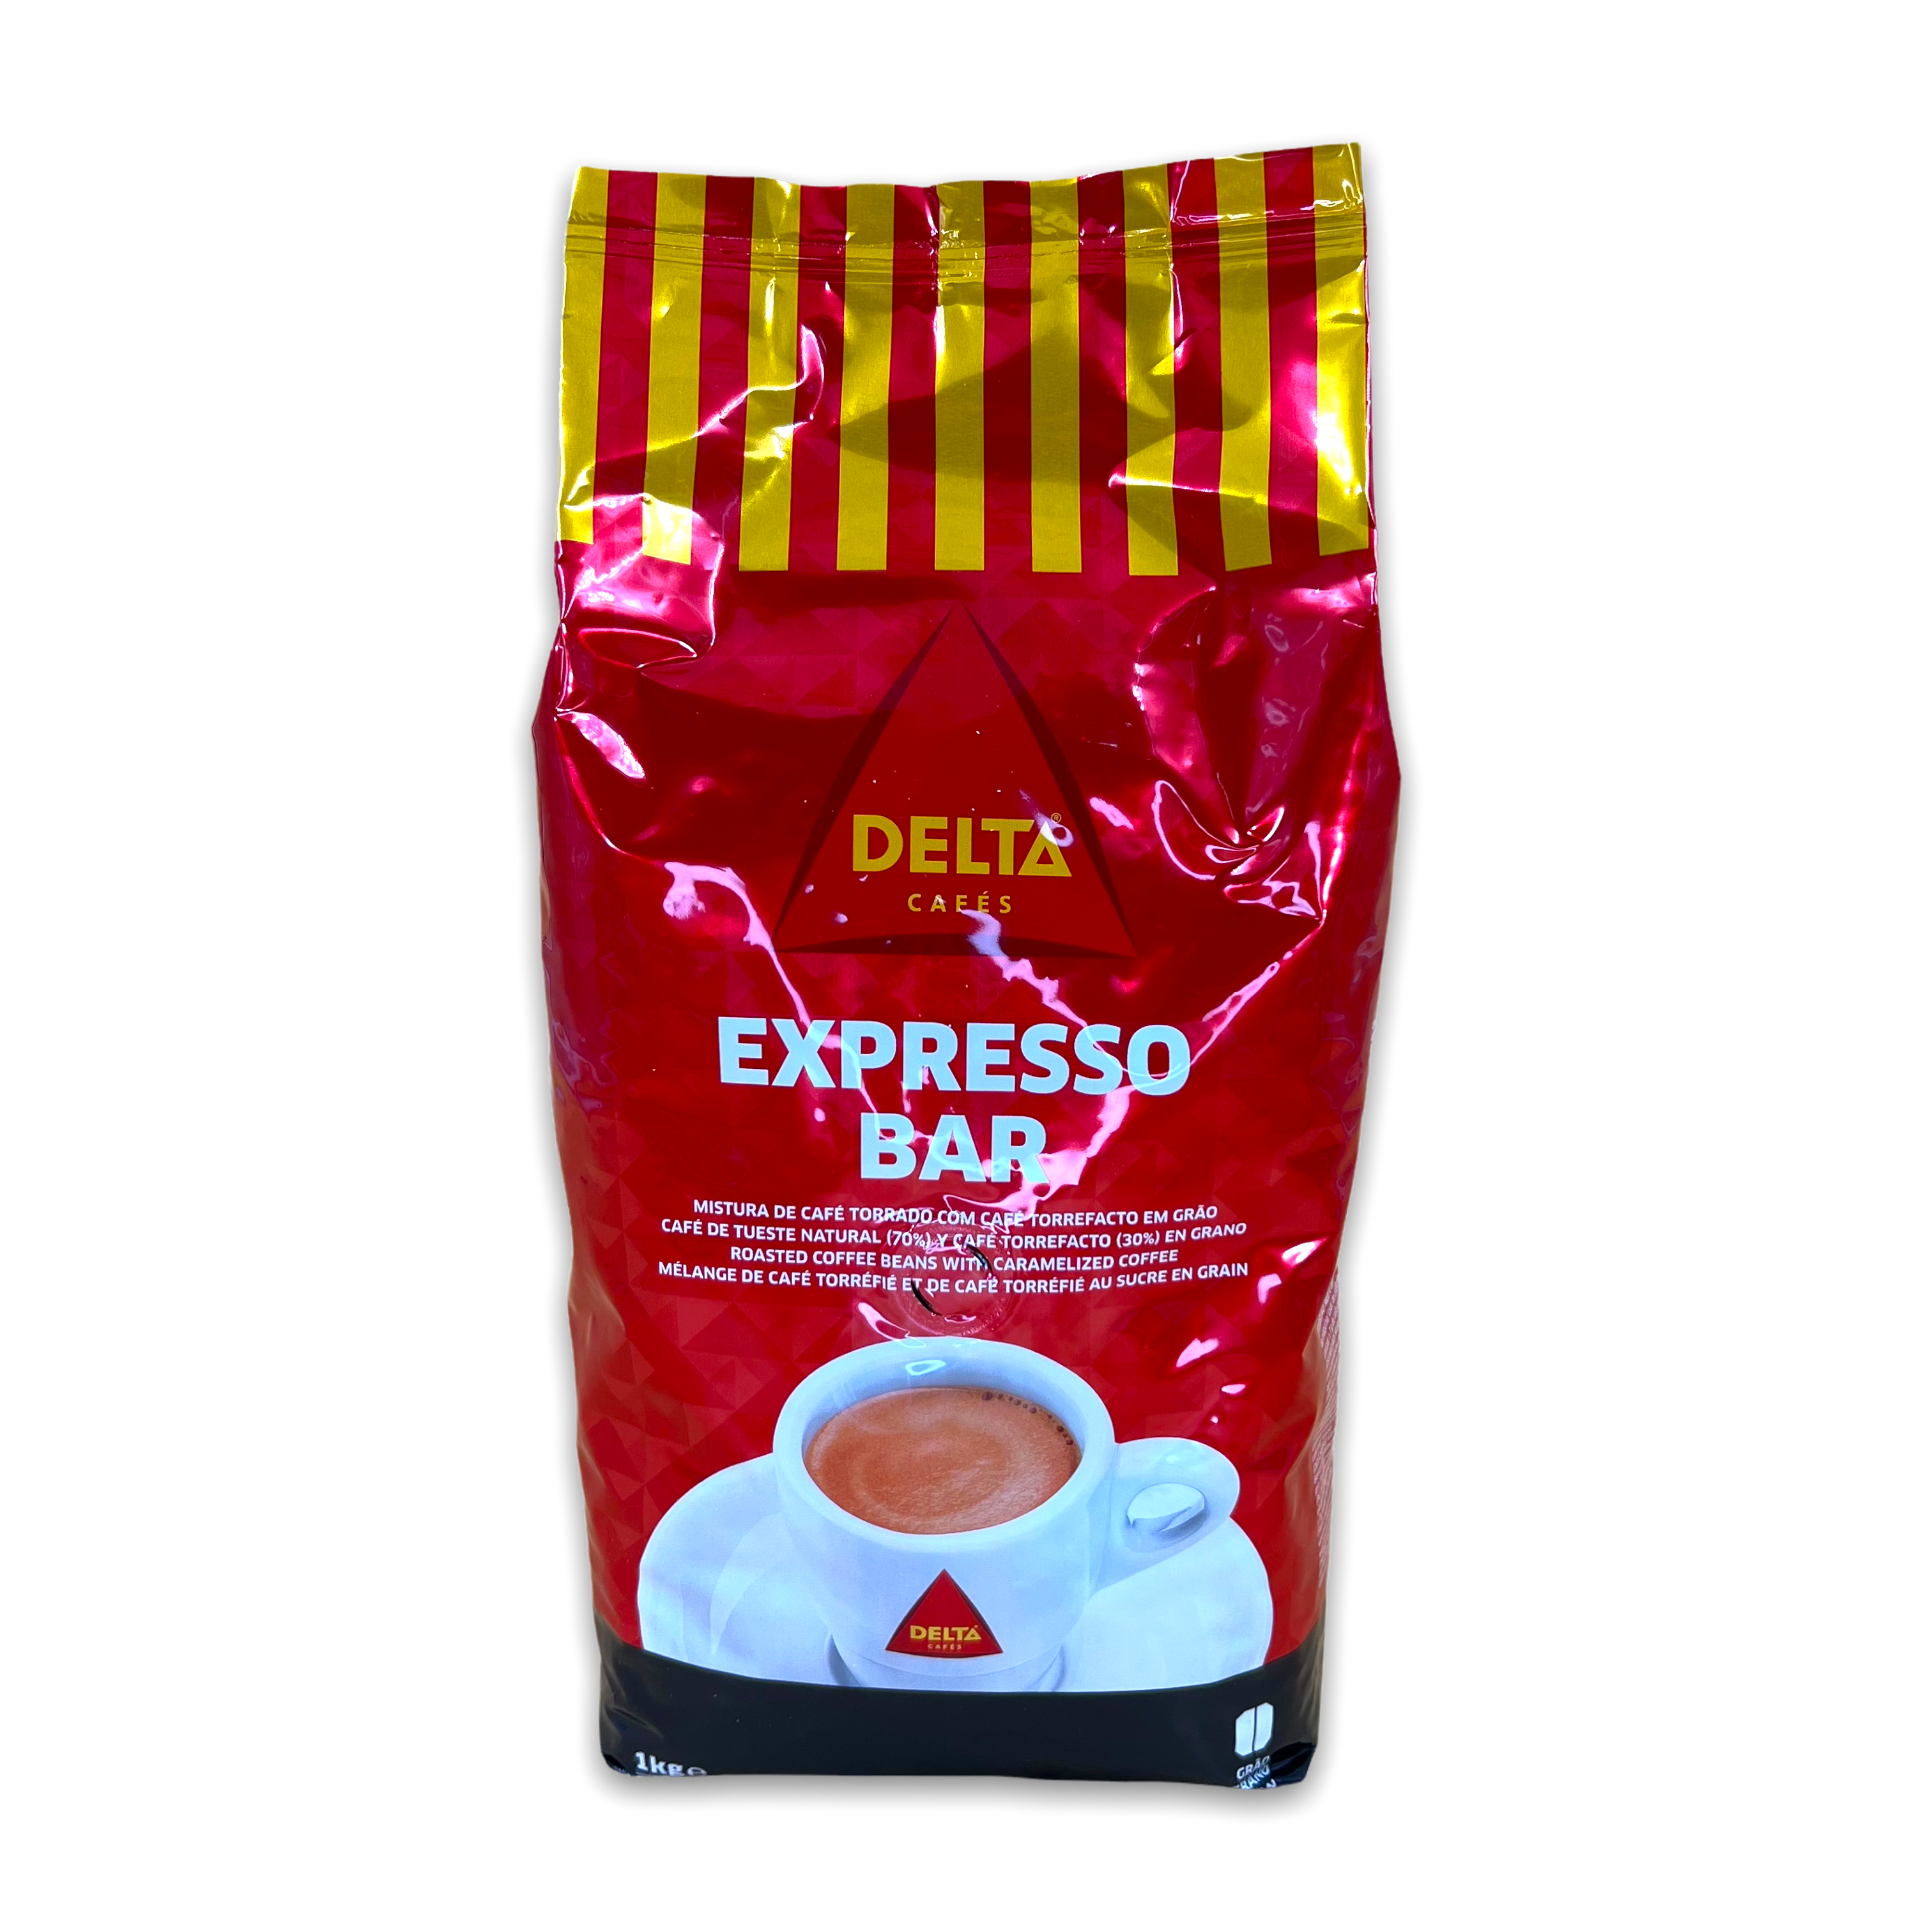 Delta Ground Roasted Coffee from Vietnam for Espresso Machines